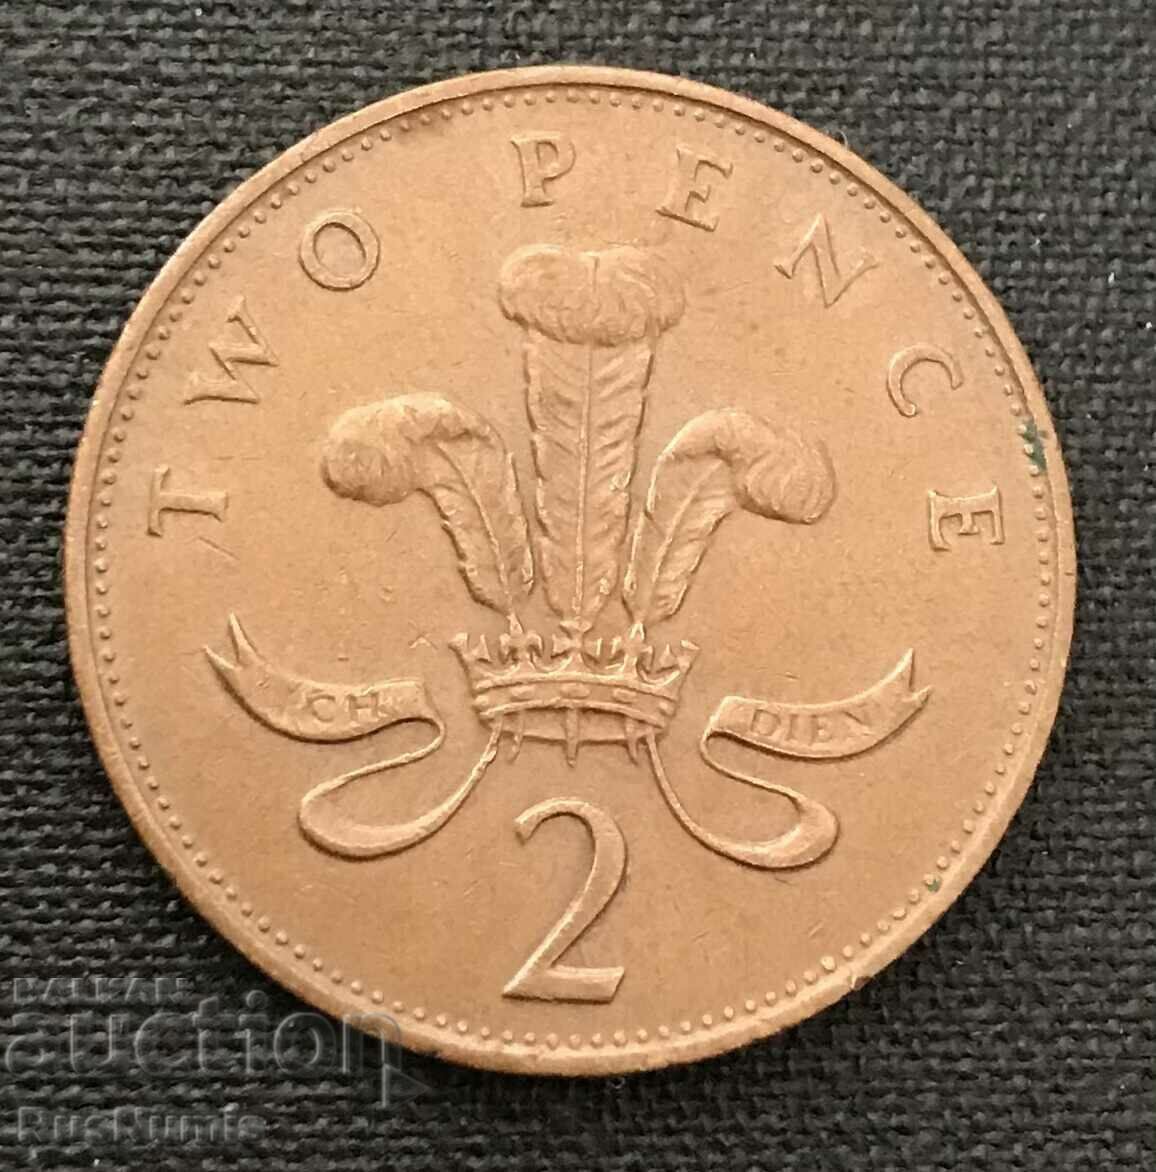 Great Britain. 2 pence 1994